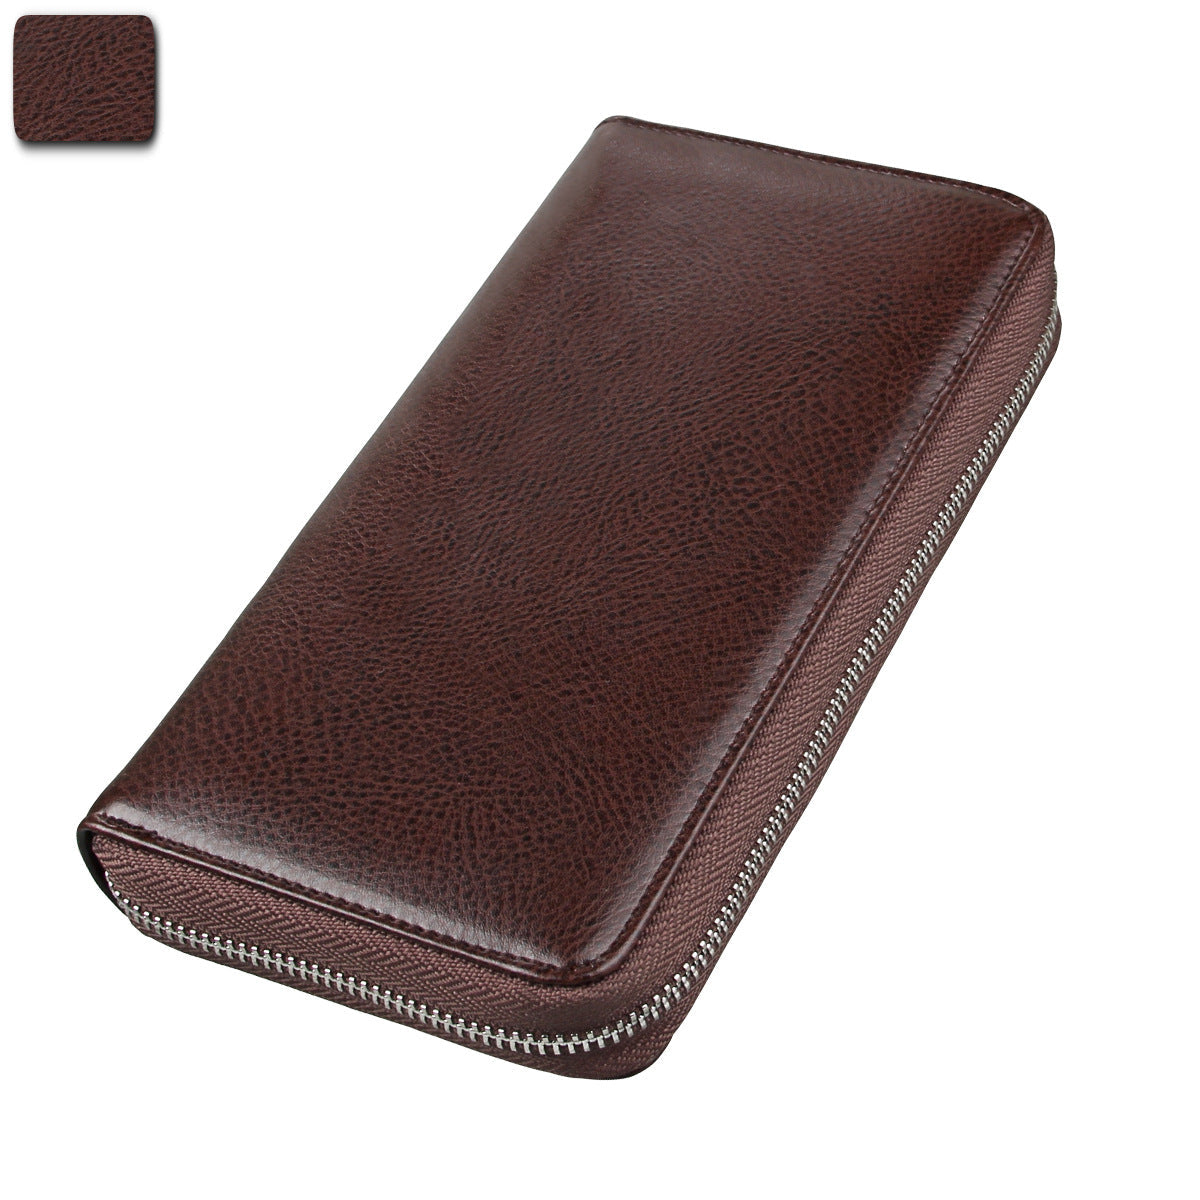 Anti RFID organ long leather wallet